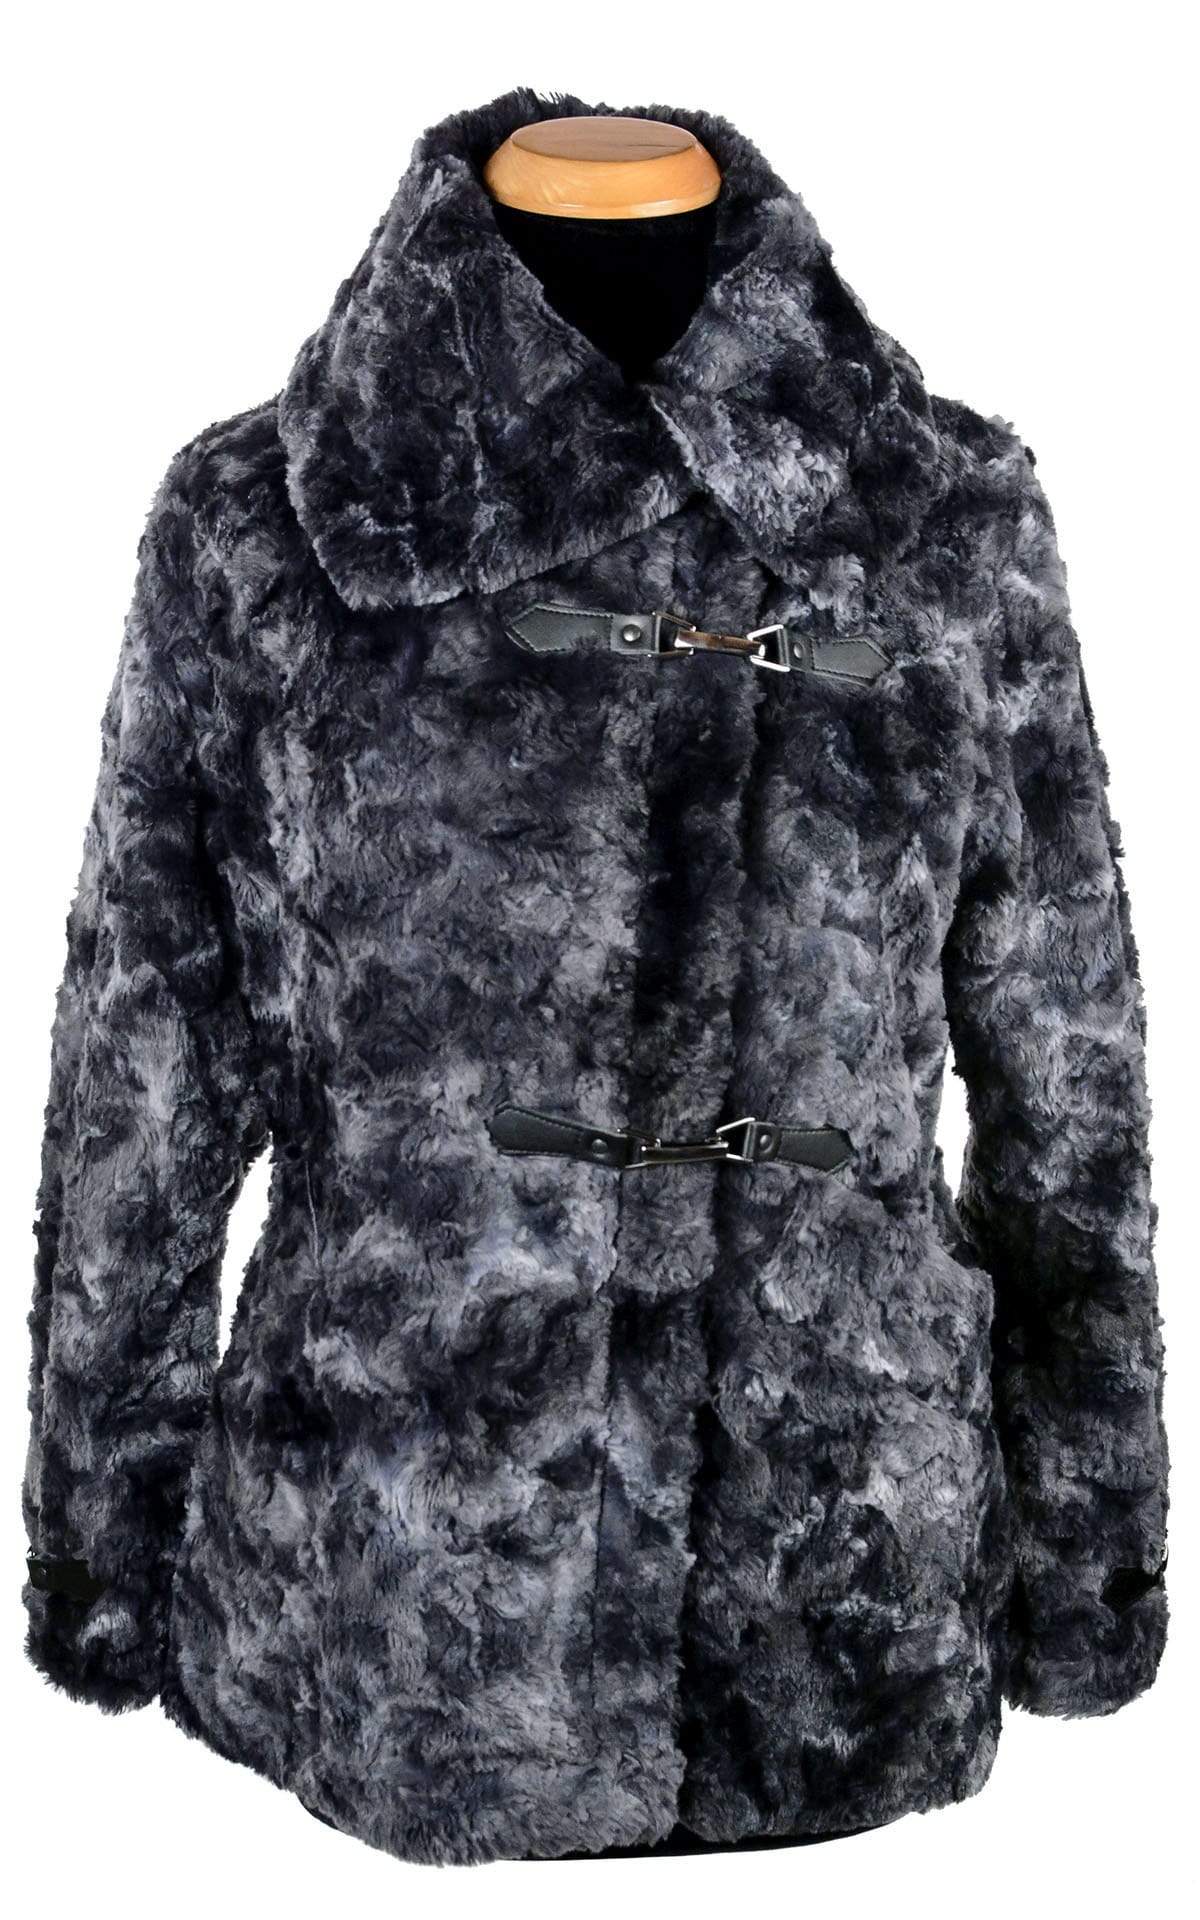 Dietrich Coat | Highland in Sky Denim and Gray Tie Dye Faux Fur Pea Coat | Featuring Buckle Clasps | Handmade in Seattle, WA | Pandemonium Millinery